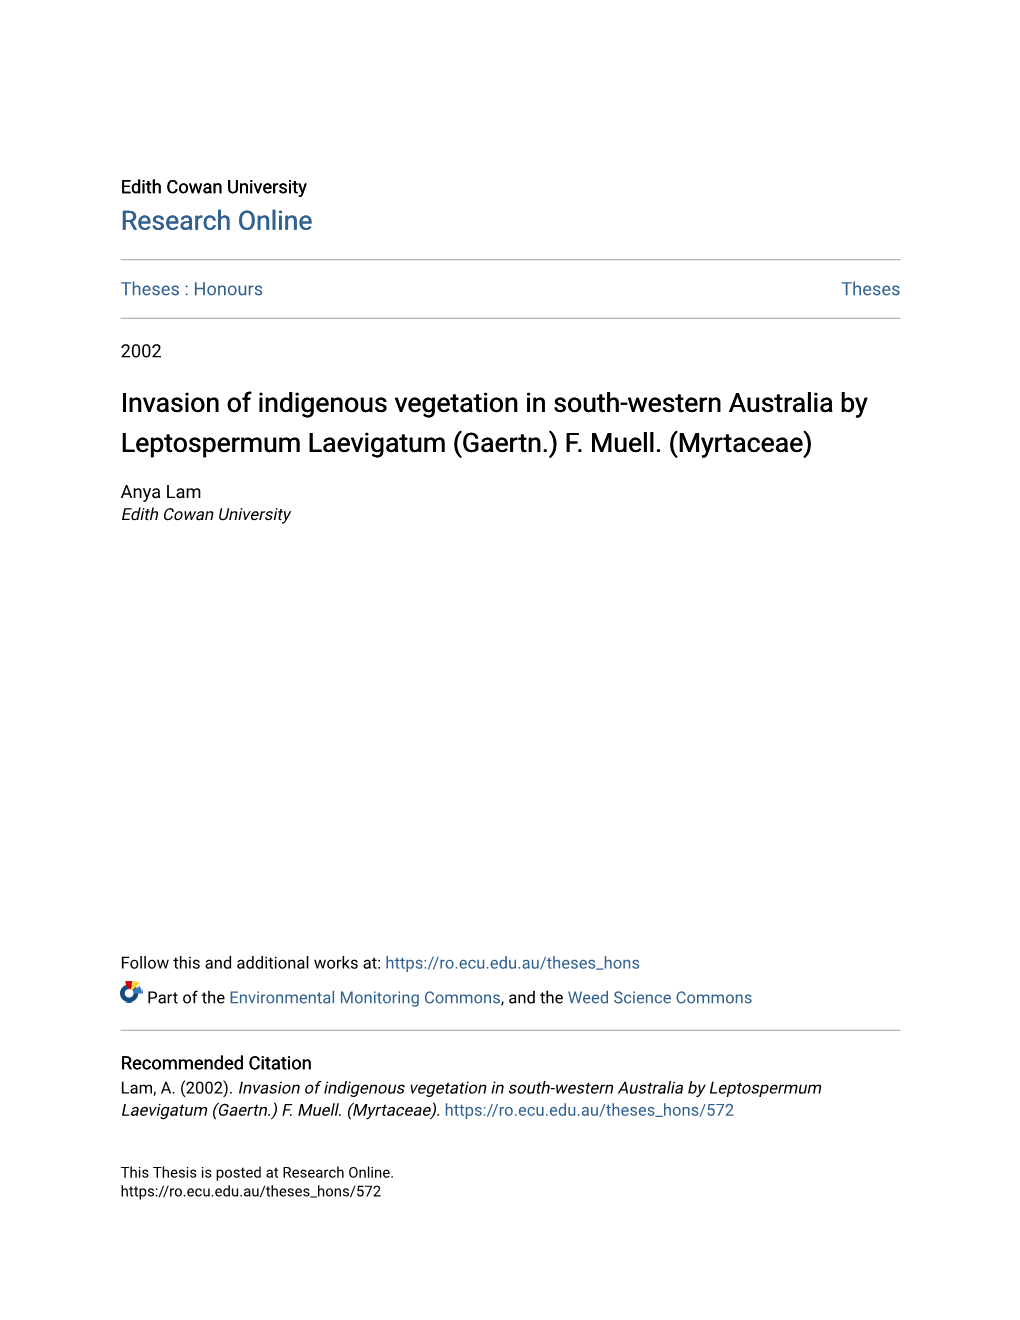 Invasion of Indigenous Vegetation in South-Western Australia by Leptospermum Laevigatum (Gaertn.) F